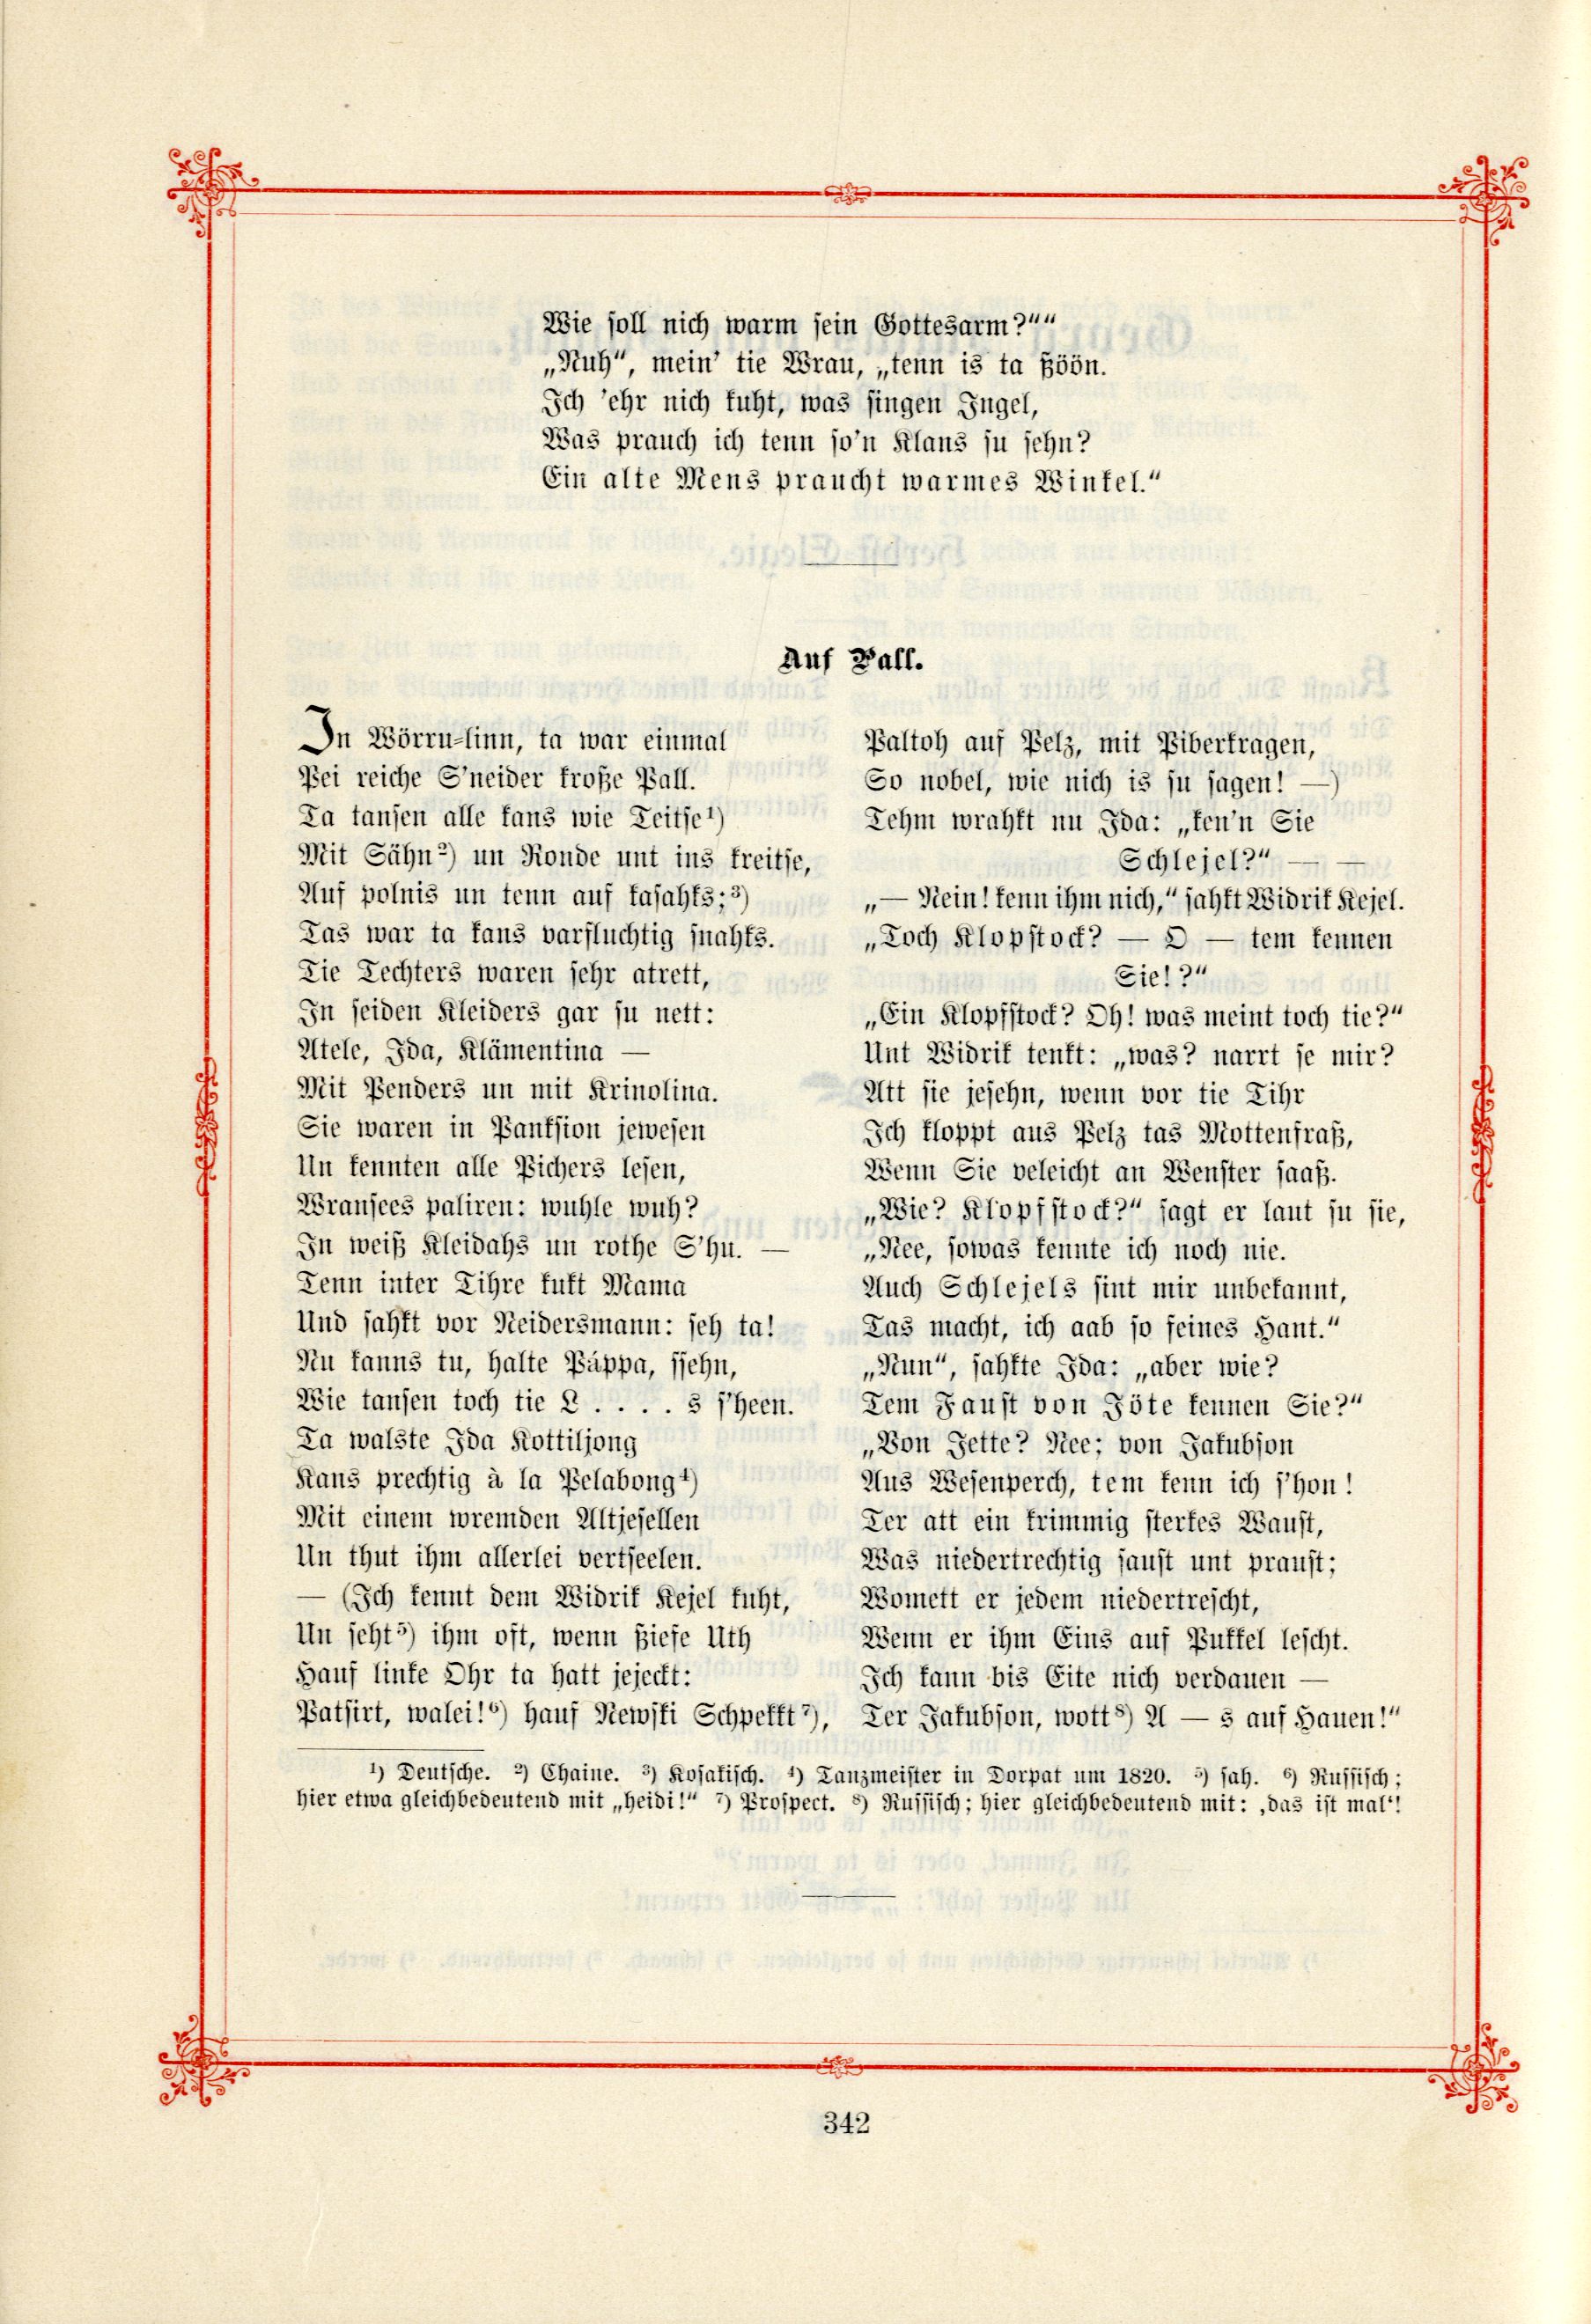 Auf Pall (1895) | 1. (342) Main body of text